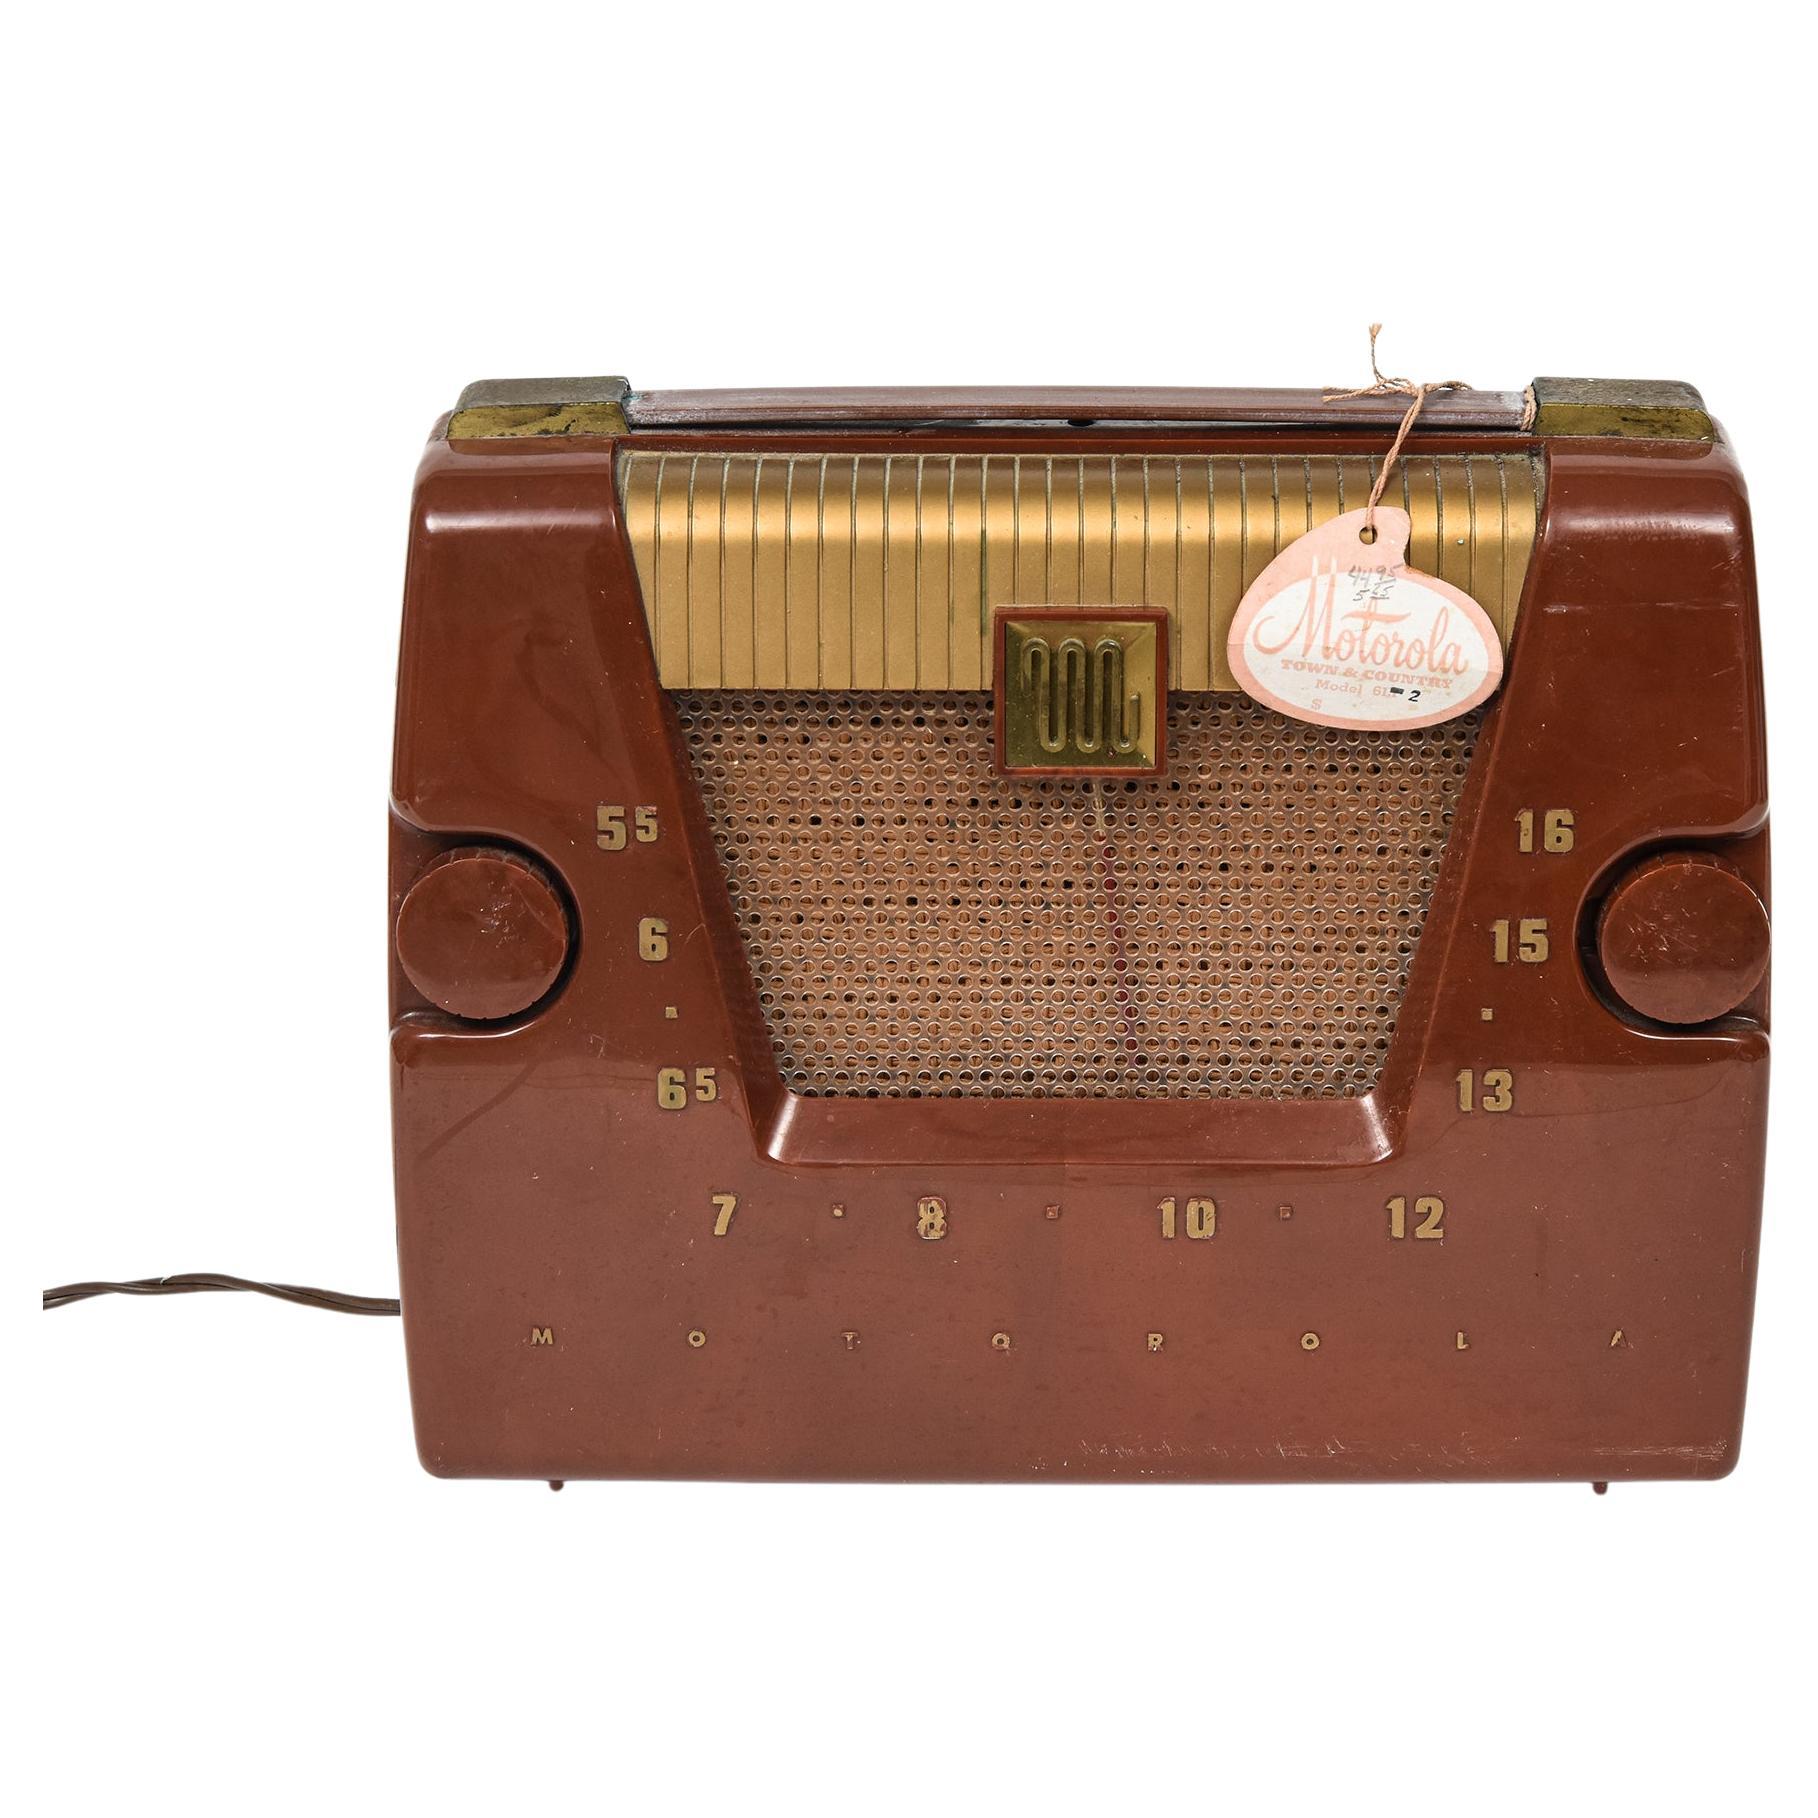 Motorola Town & Country Modell 6L2 Porzellan- Butterscotch- Radio, 1950er Jahre